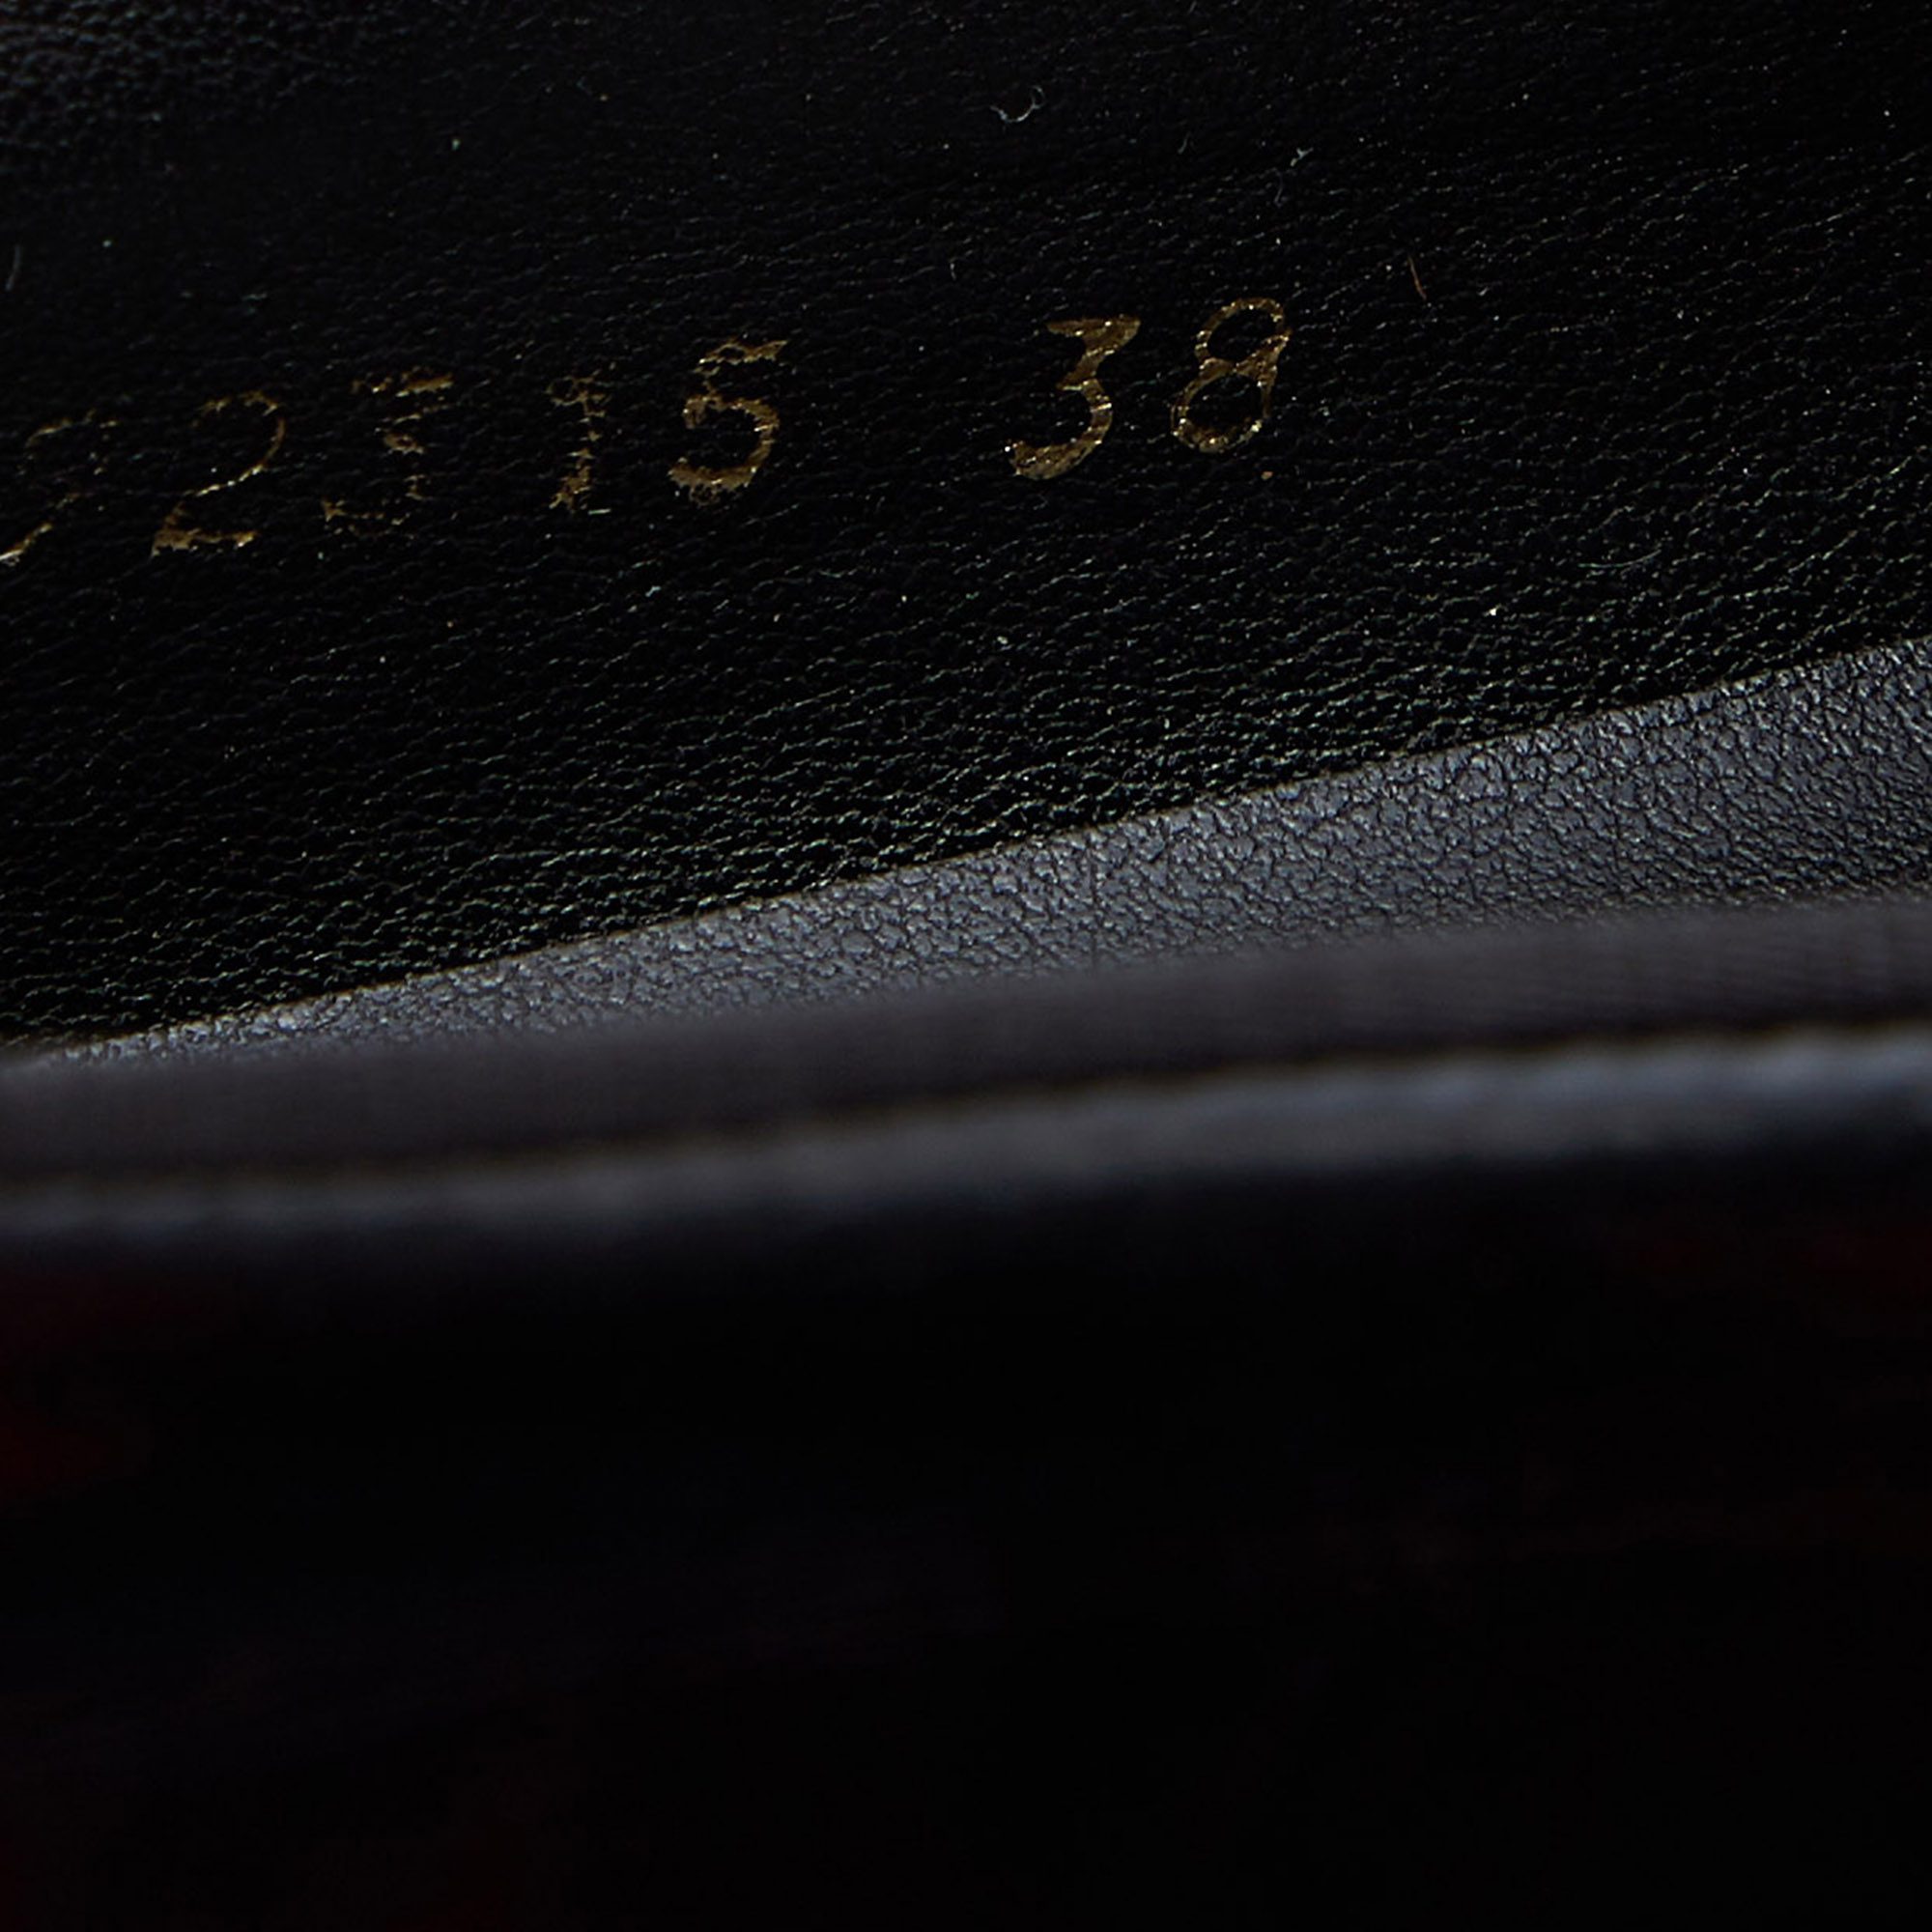 Stella McCartney Black Faux Leather Chain-Link Platform Slip On Sneakers Size 38